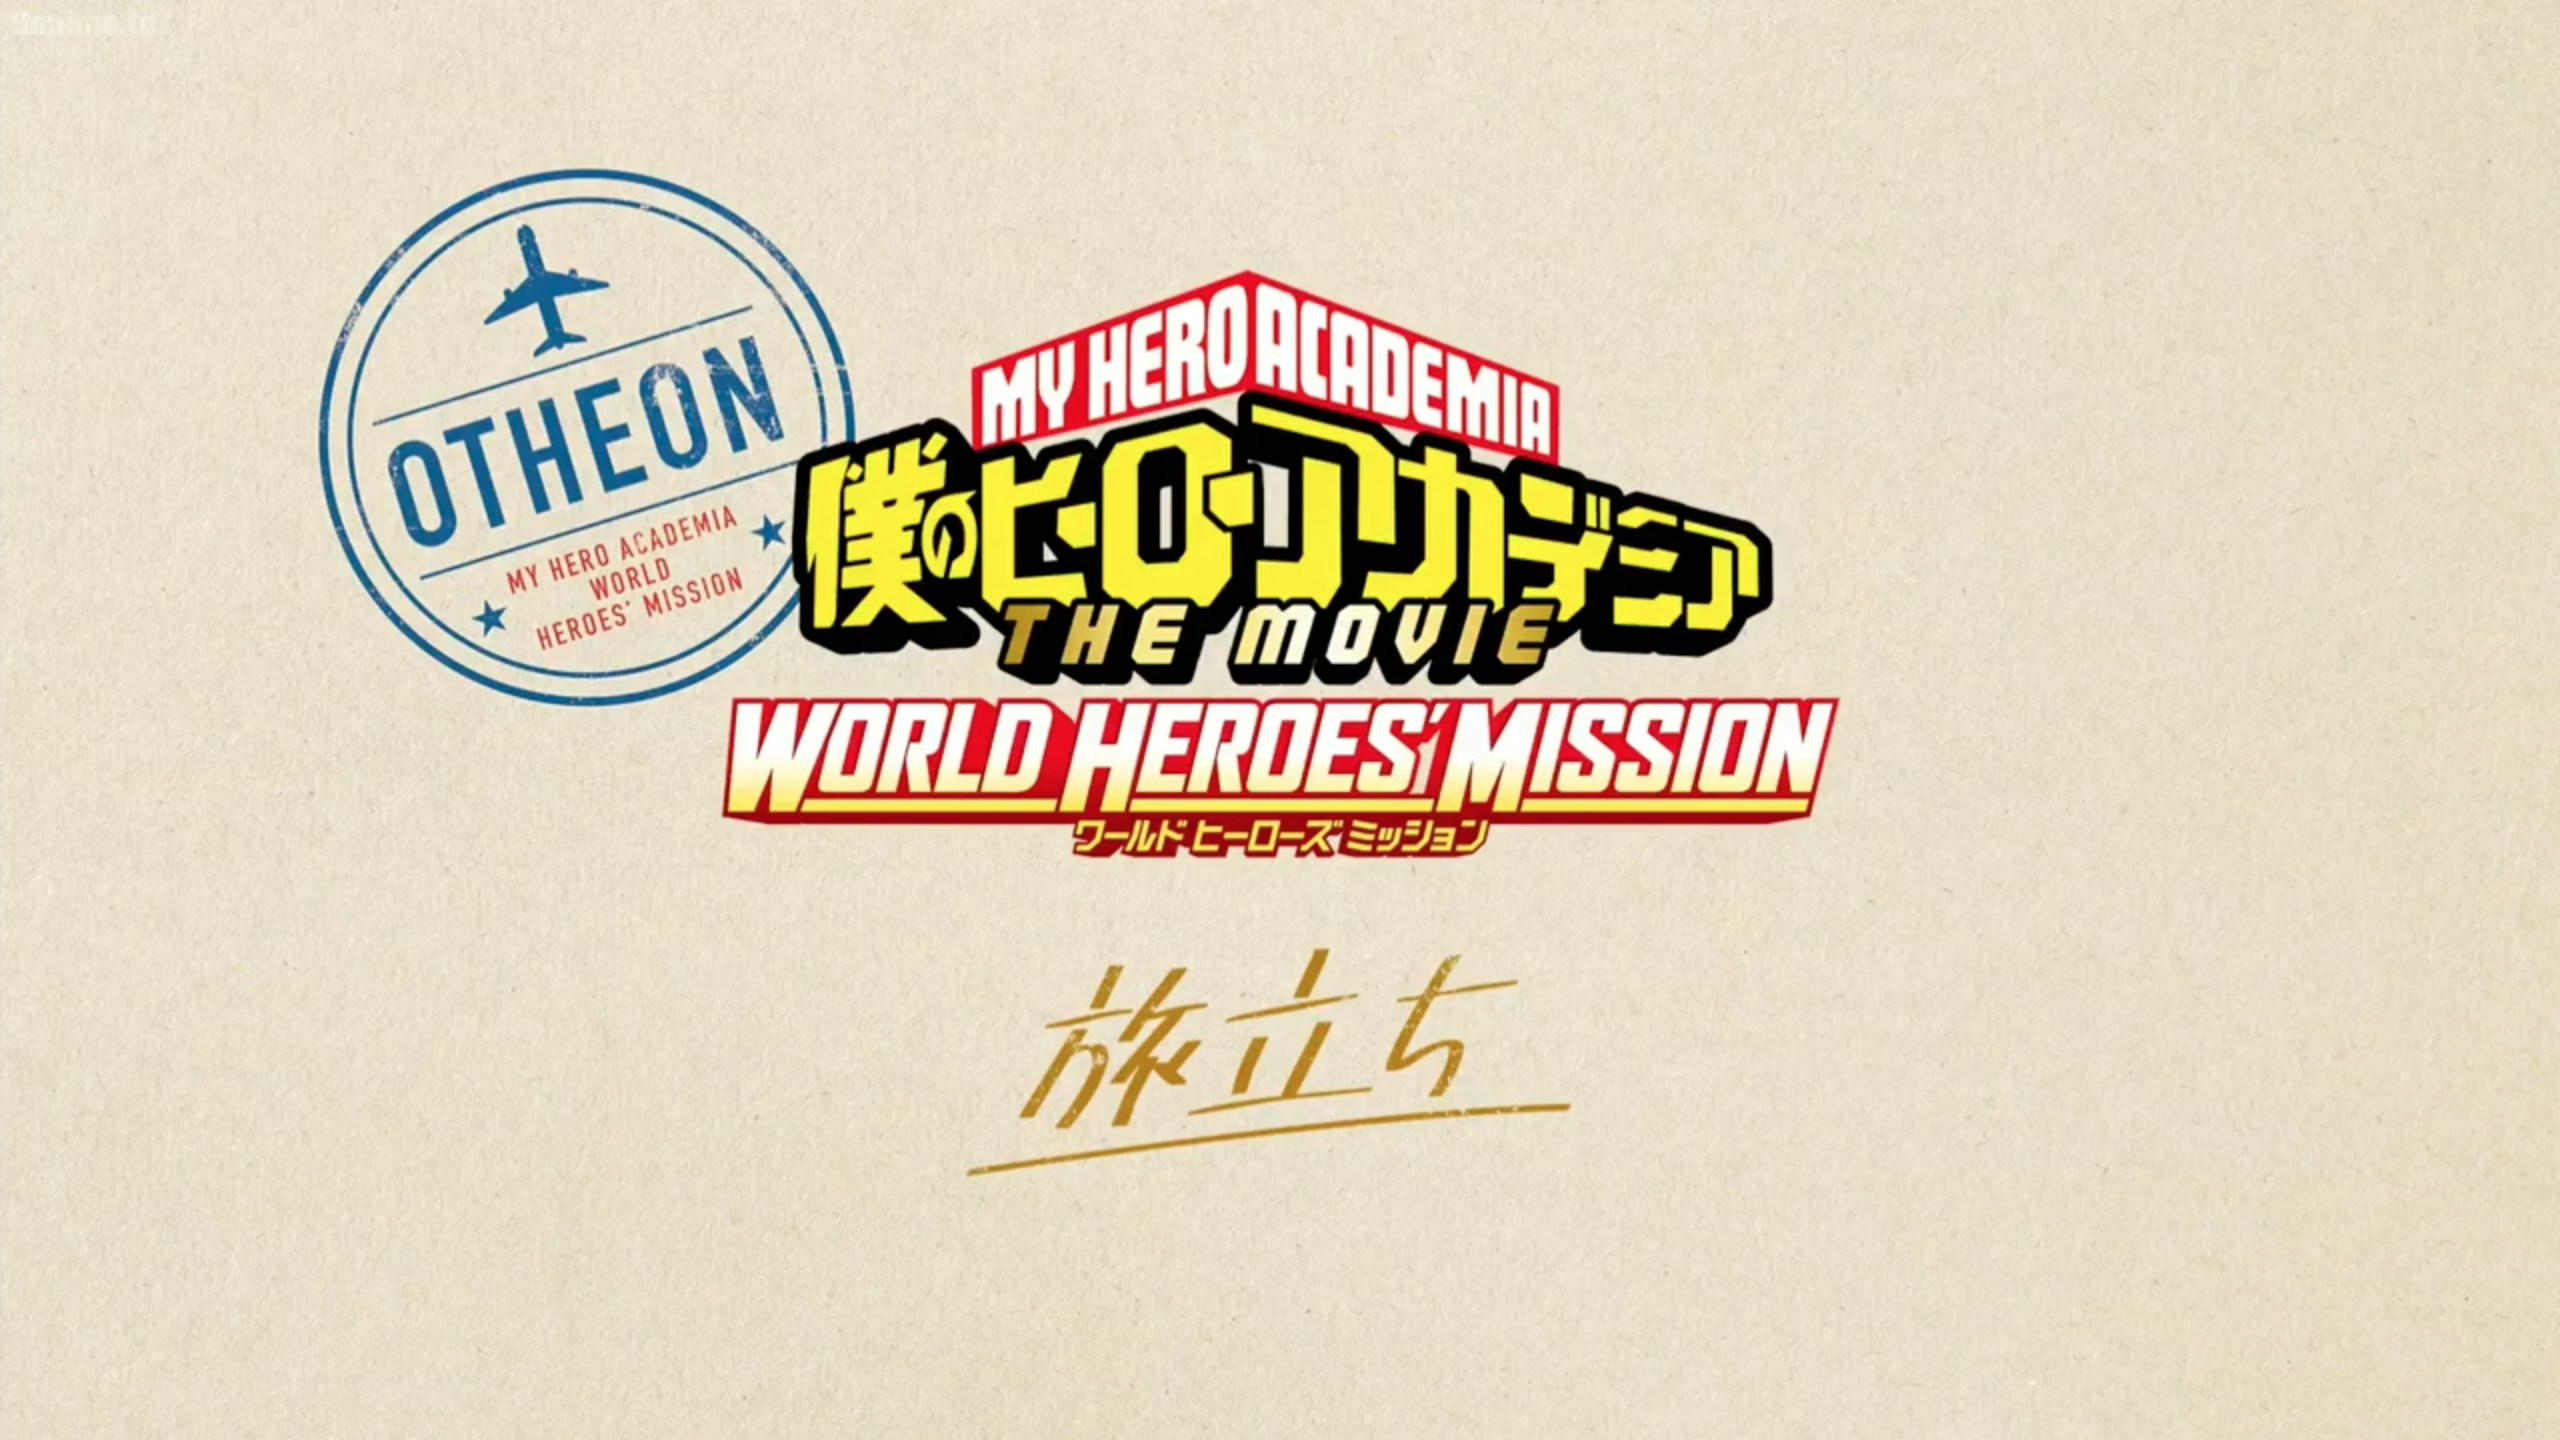 My Hero Academia: World Heroes' Mission Ticket Sales Go Live